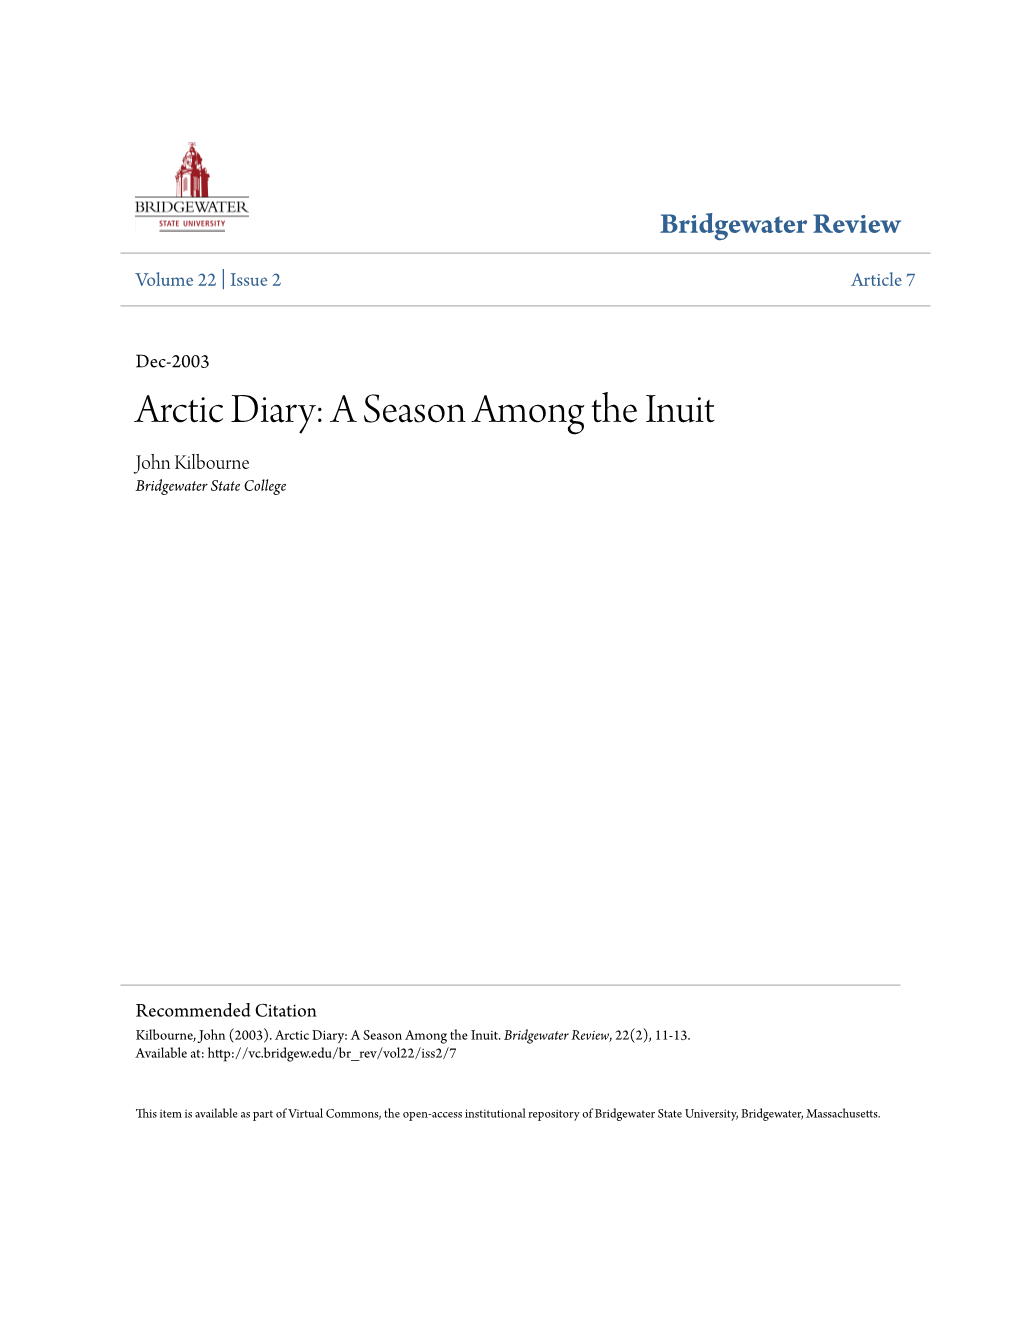 Arctic Diary: a Season Among the Inuit John Kilbourne Bridgewater State College